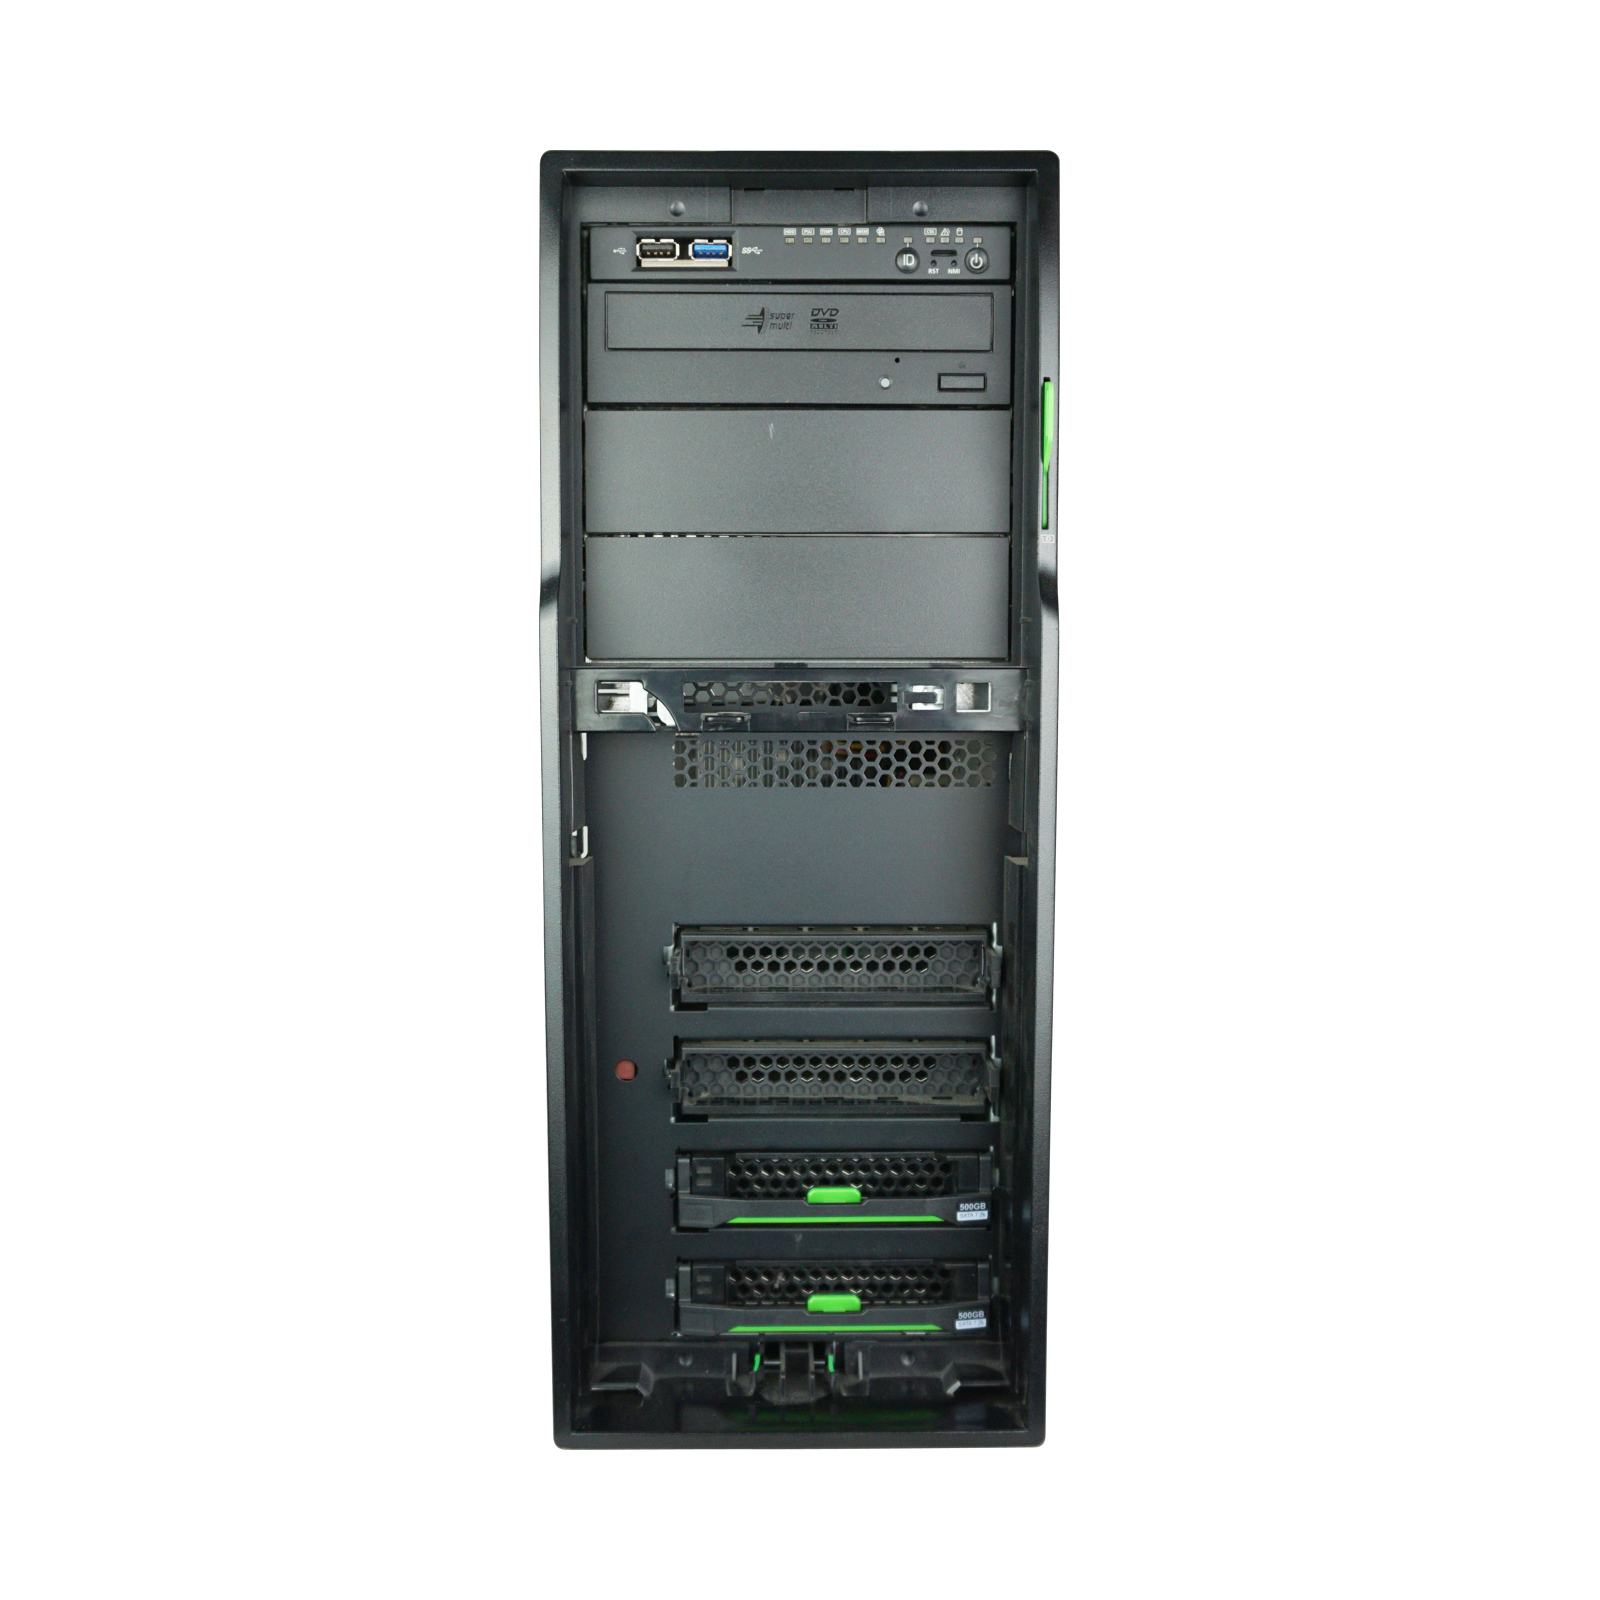 Fujitsu Primergy TX1330 M1 PS170 Xeon E3-1220 v3 3.1GHz 8GB RAM 2x 500GB  10K SAS Server